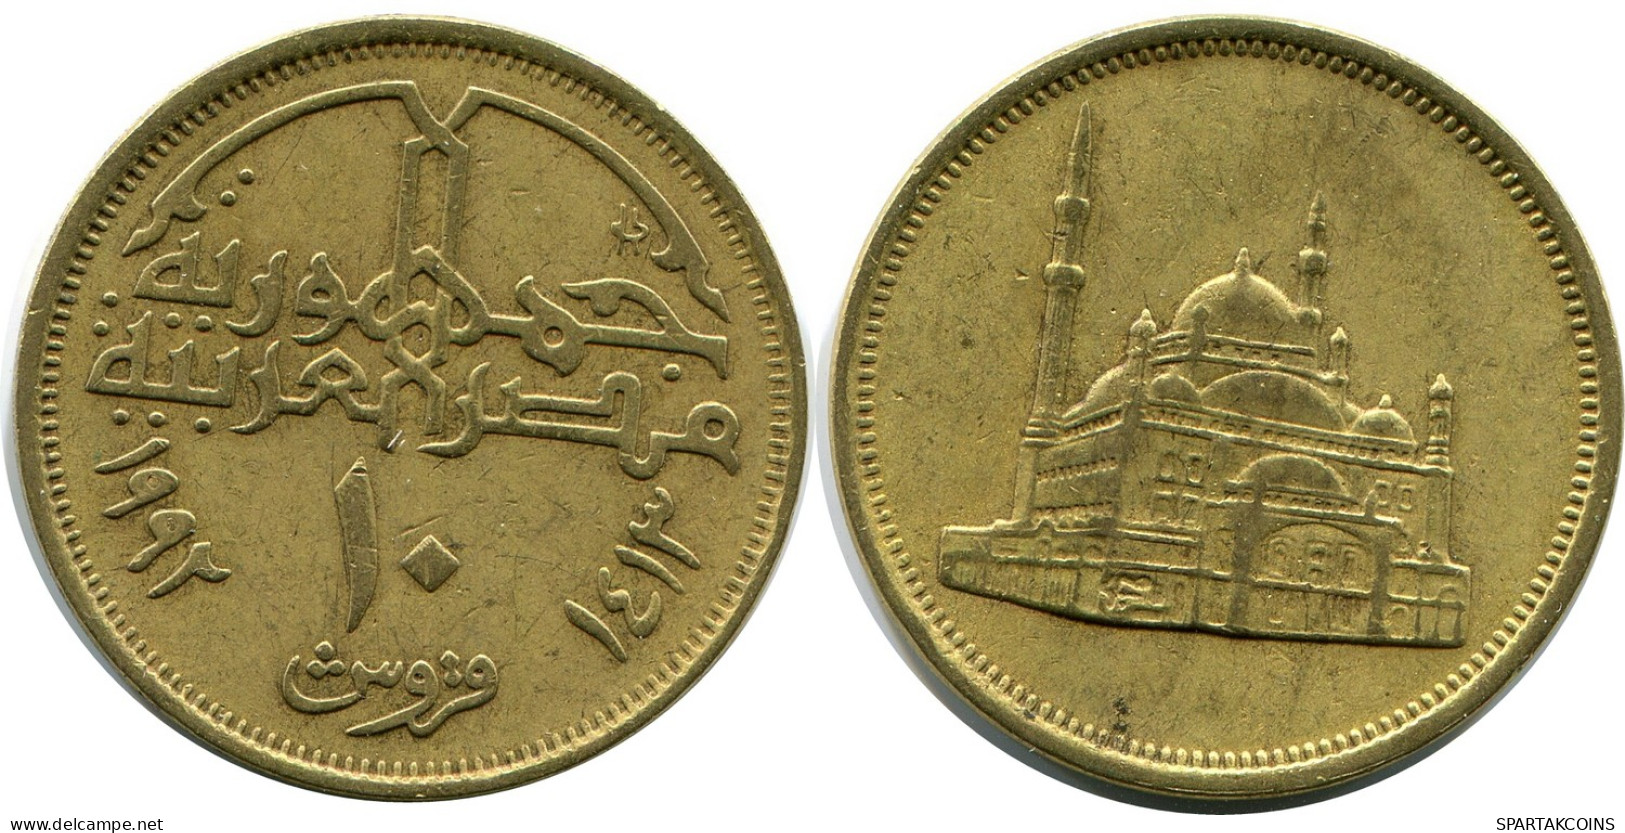 10 QIRSH 1992 EGYPT Islamic Coin #AH962.U - Egypt